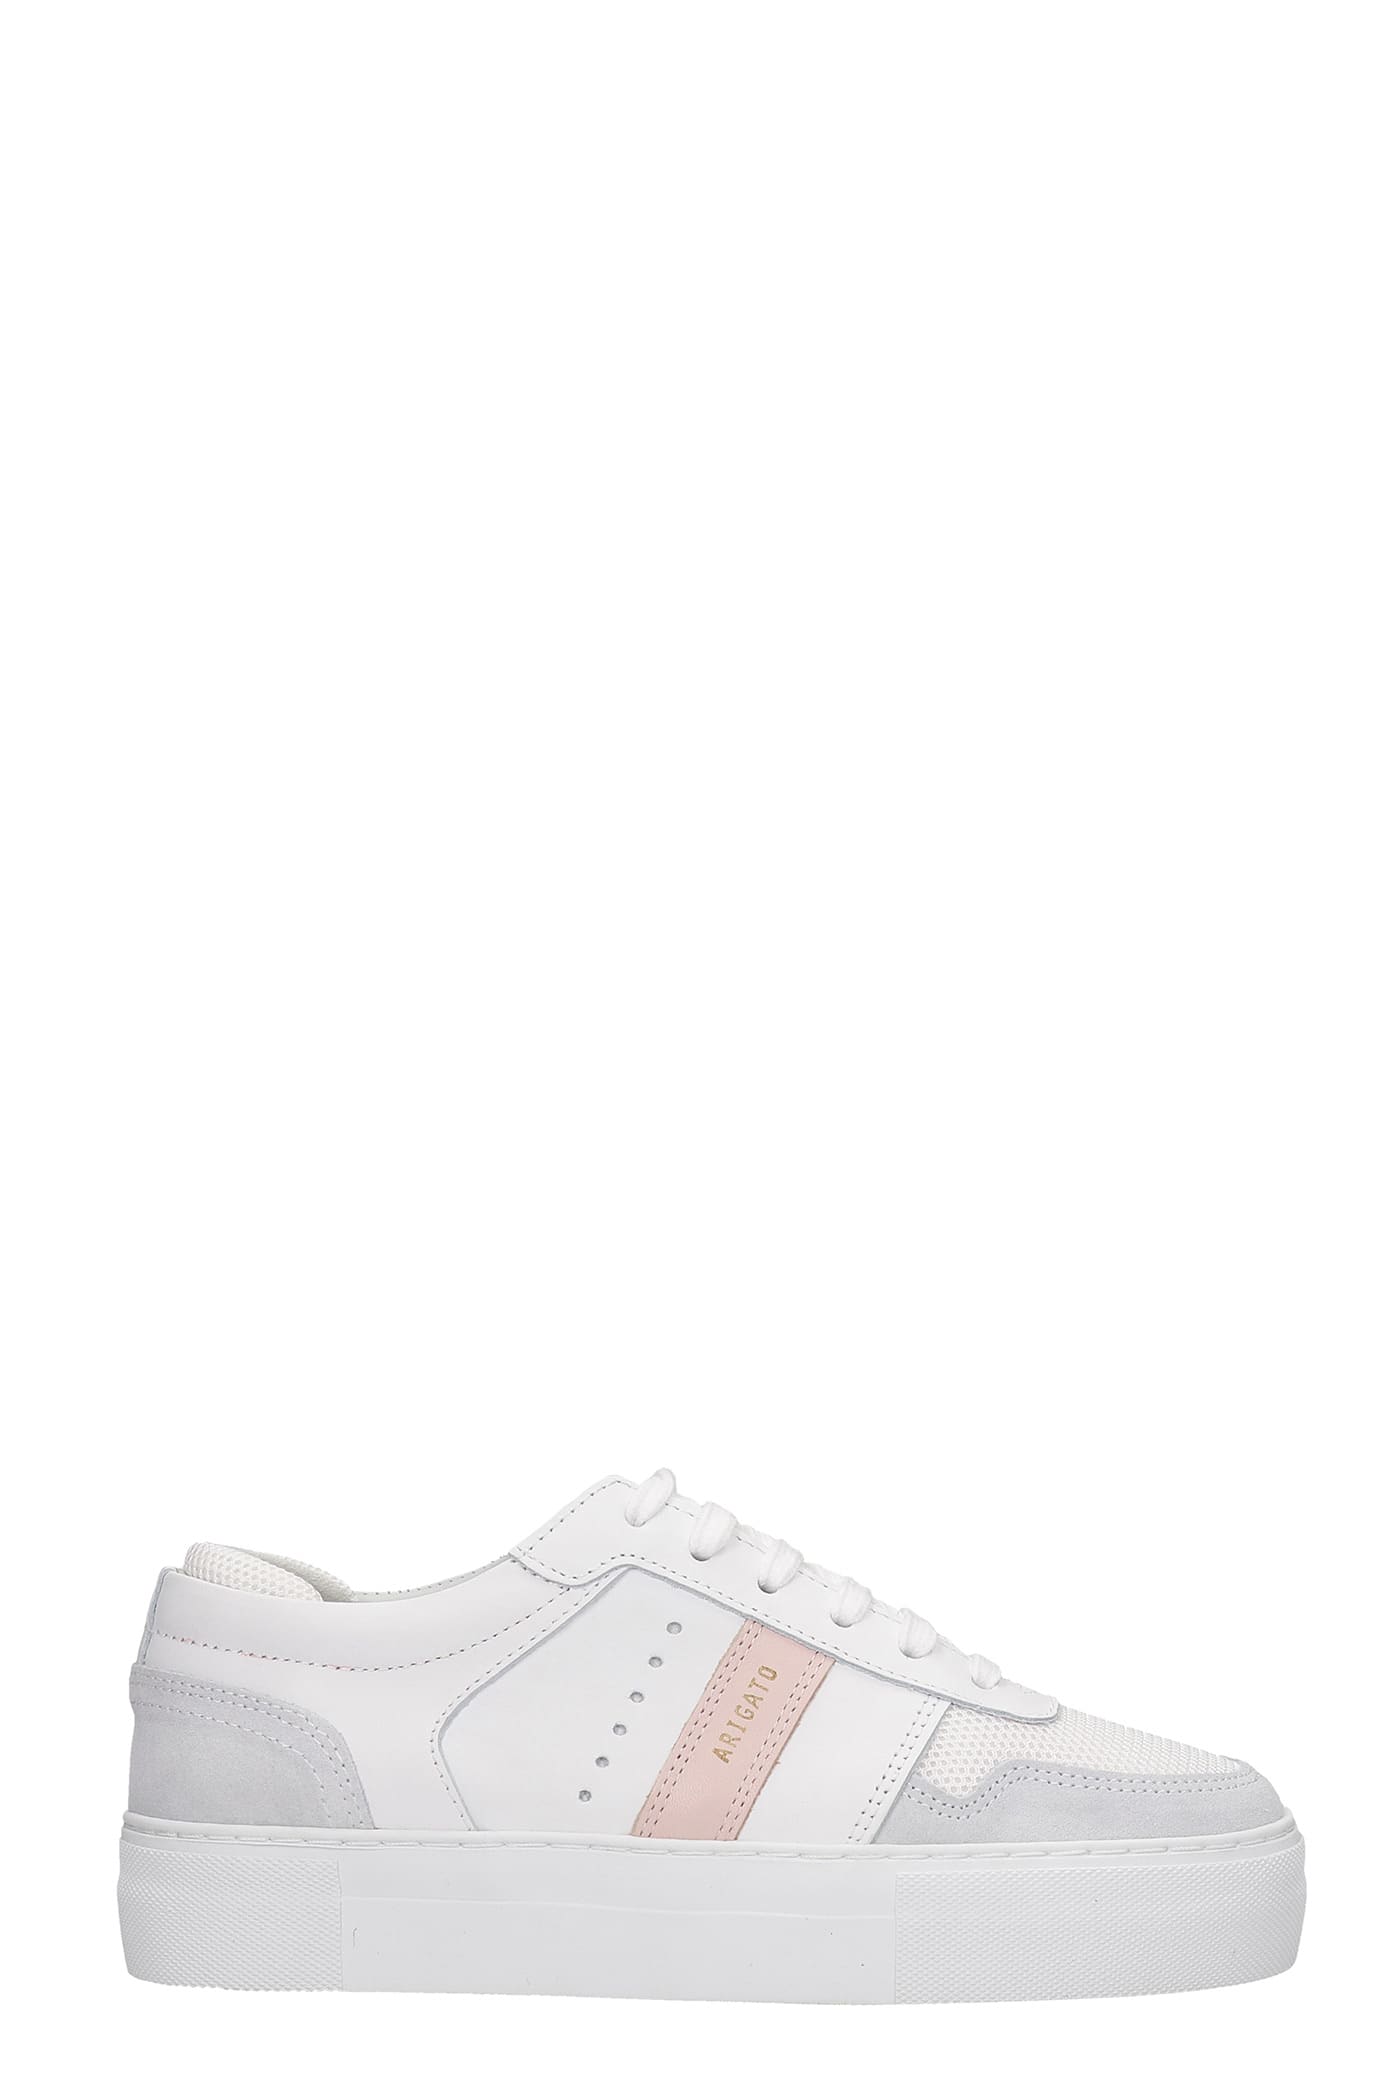 Axel Arigato Platform Sneake Sneakers In White Leather